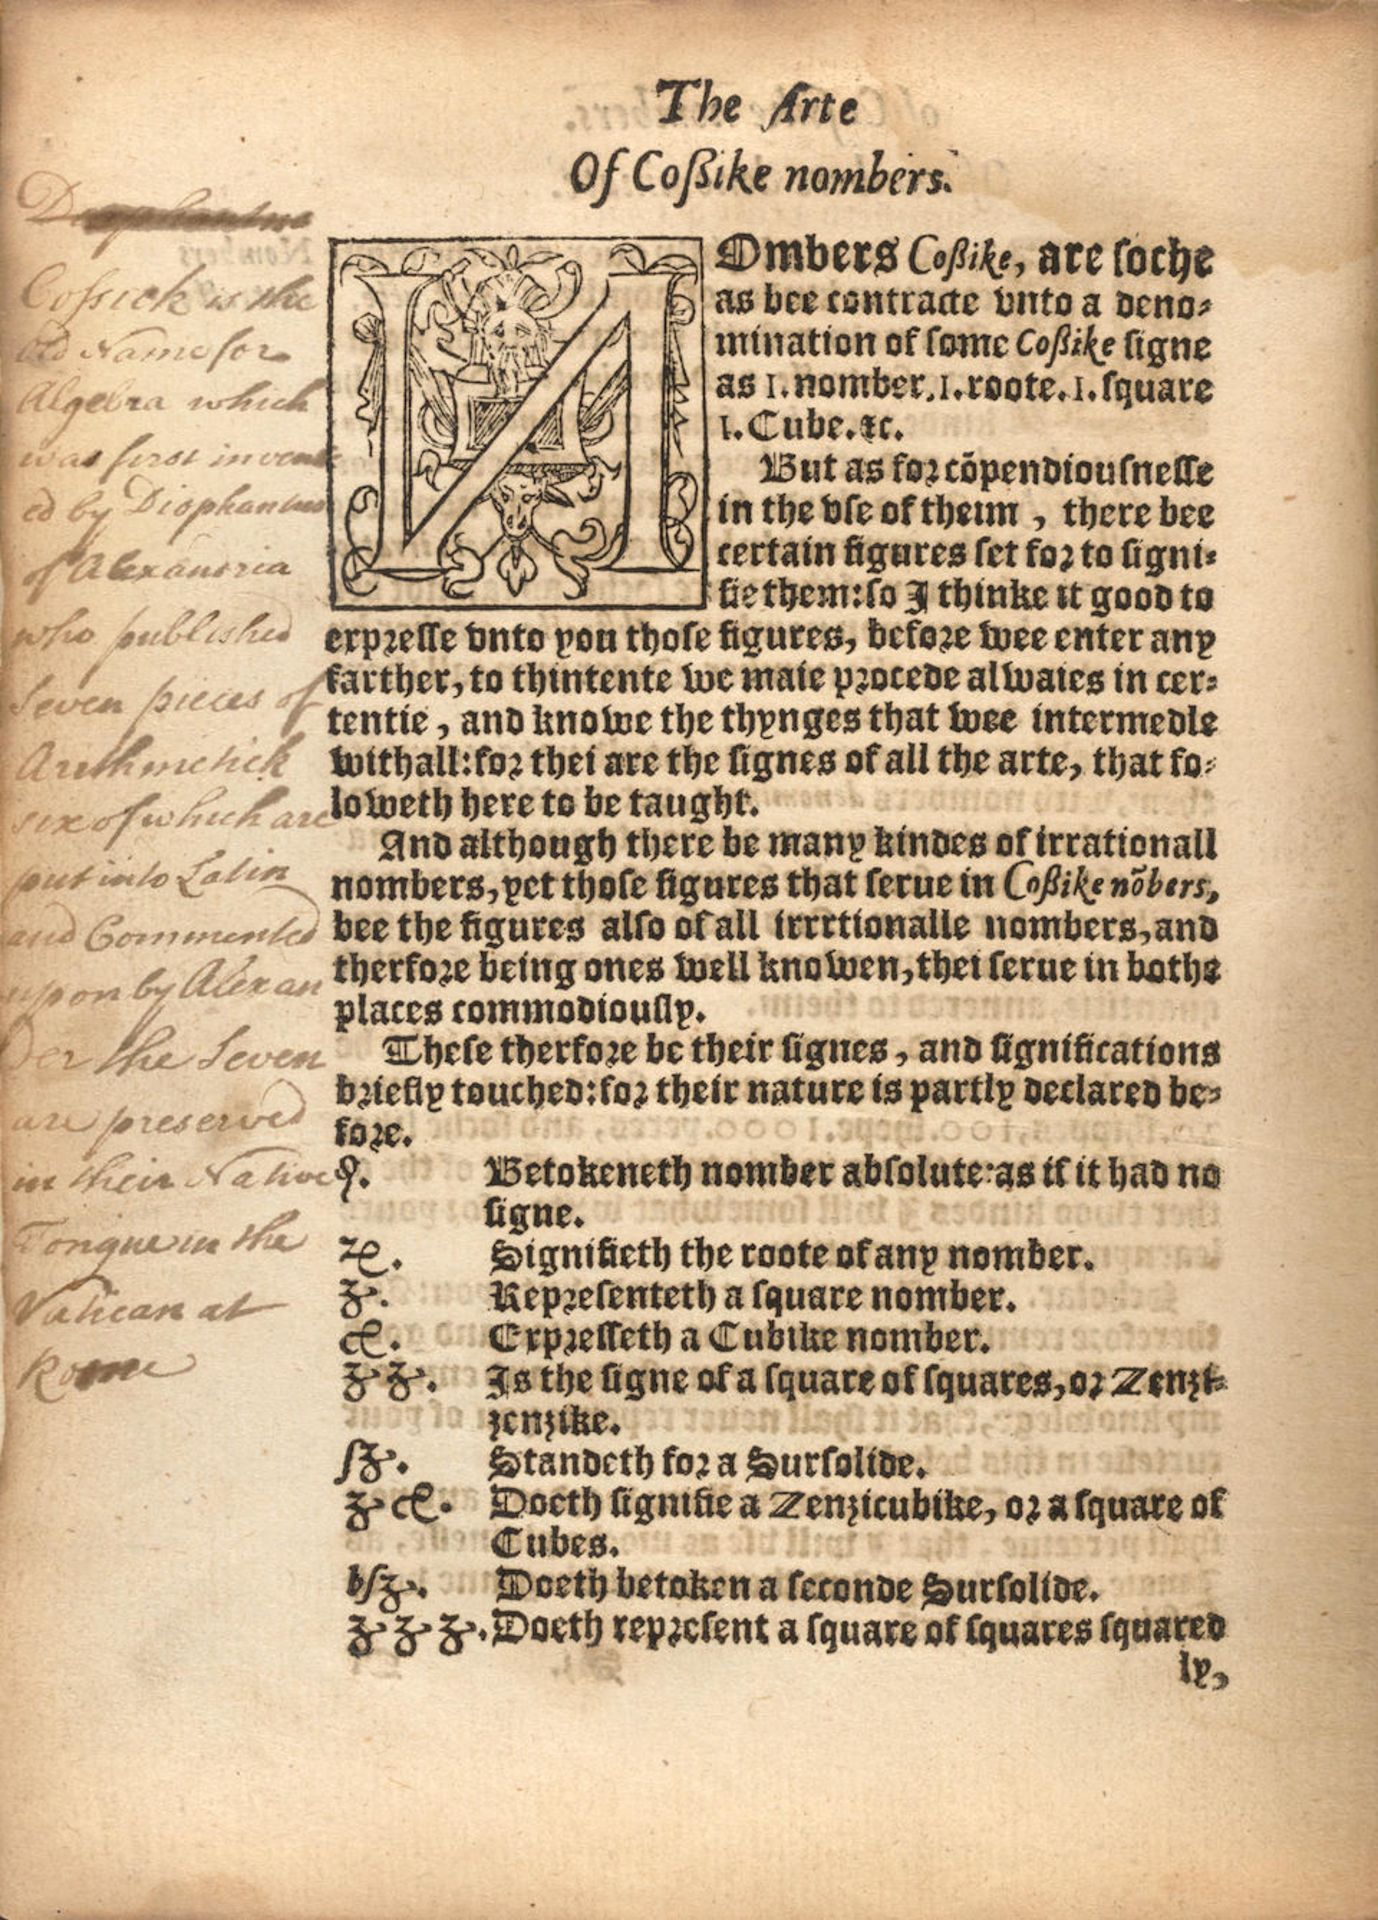 [MATHEMATICS] FIRST BOOK IN ENGLISH ON ALGEBRA. RECORDE, ROBERT. c.1510-1558. Whetstone of Witte...